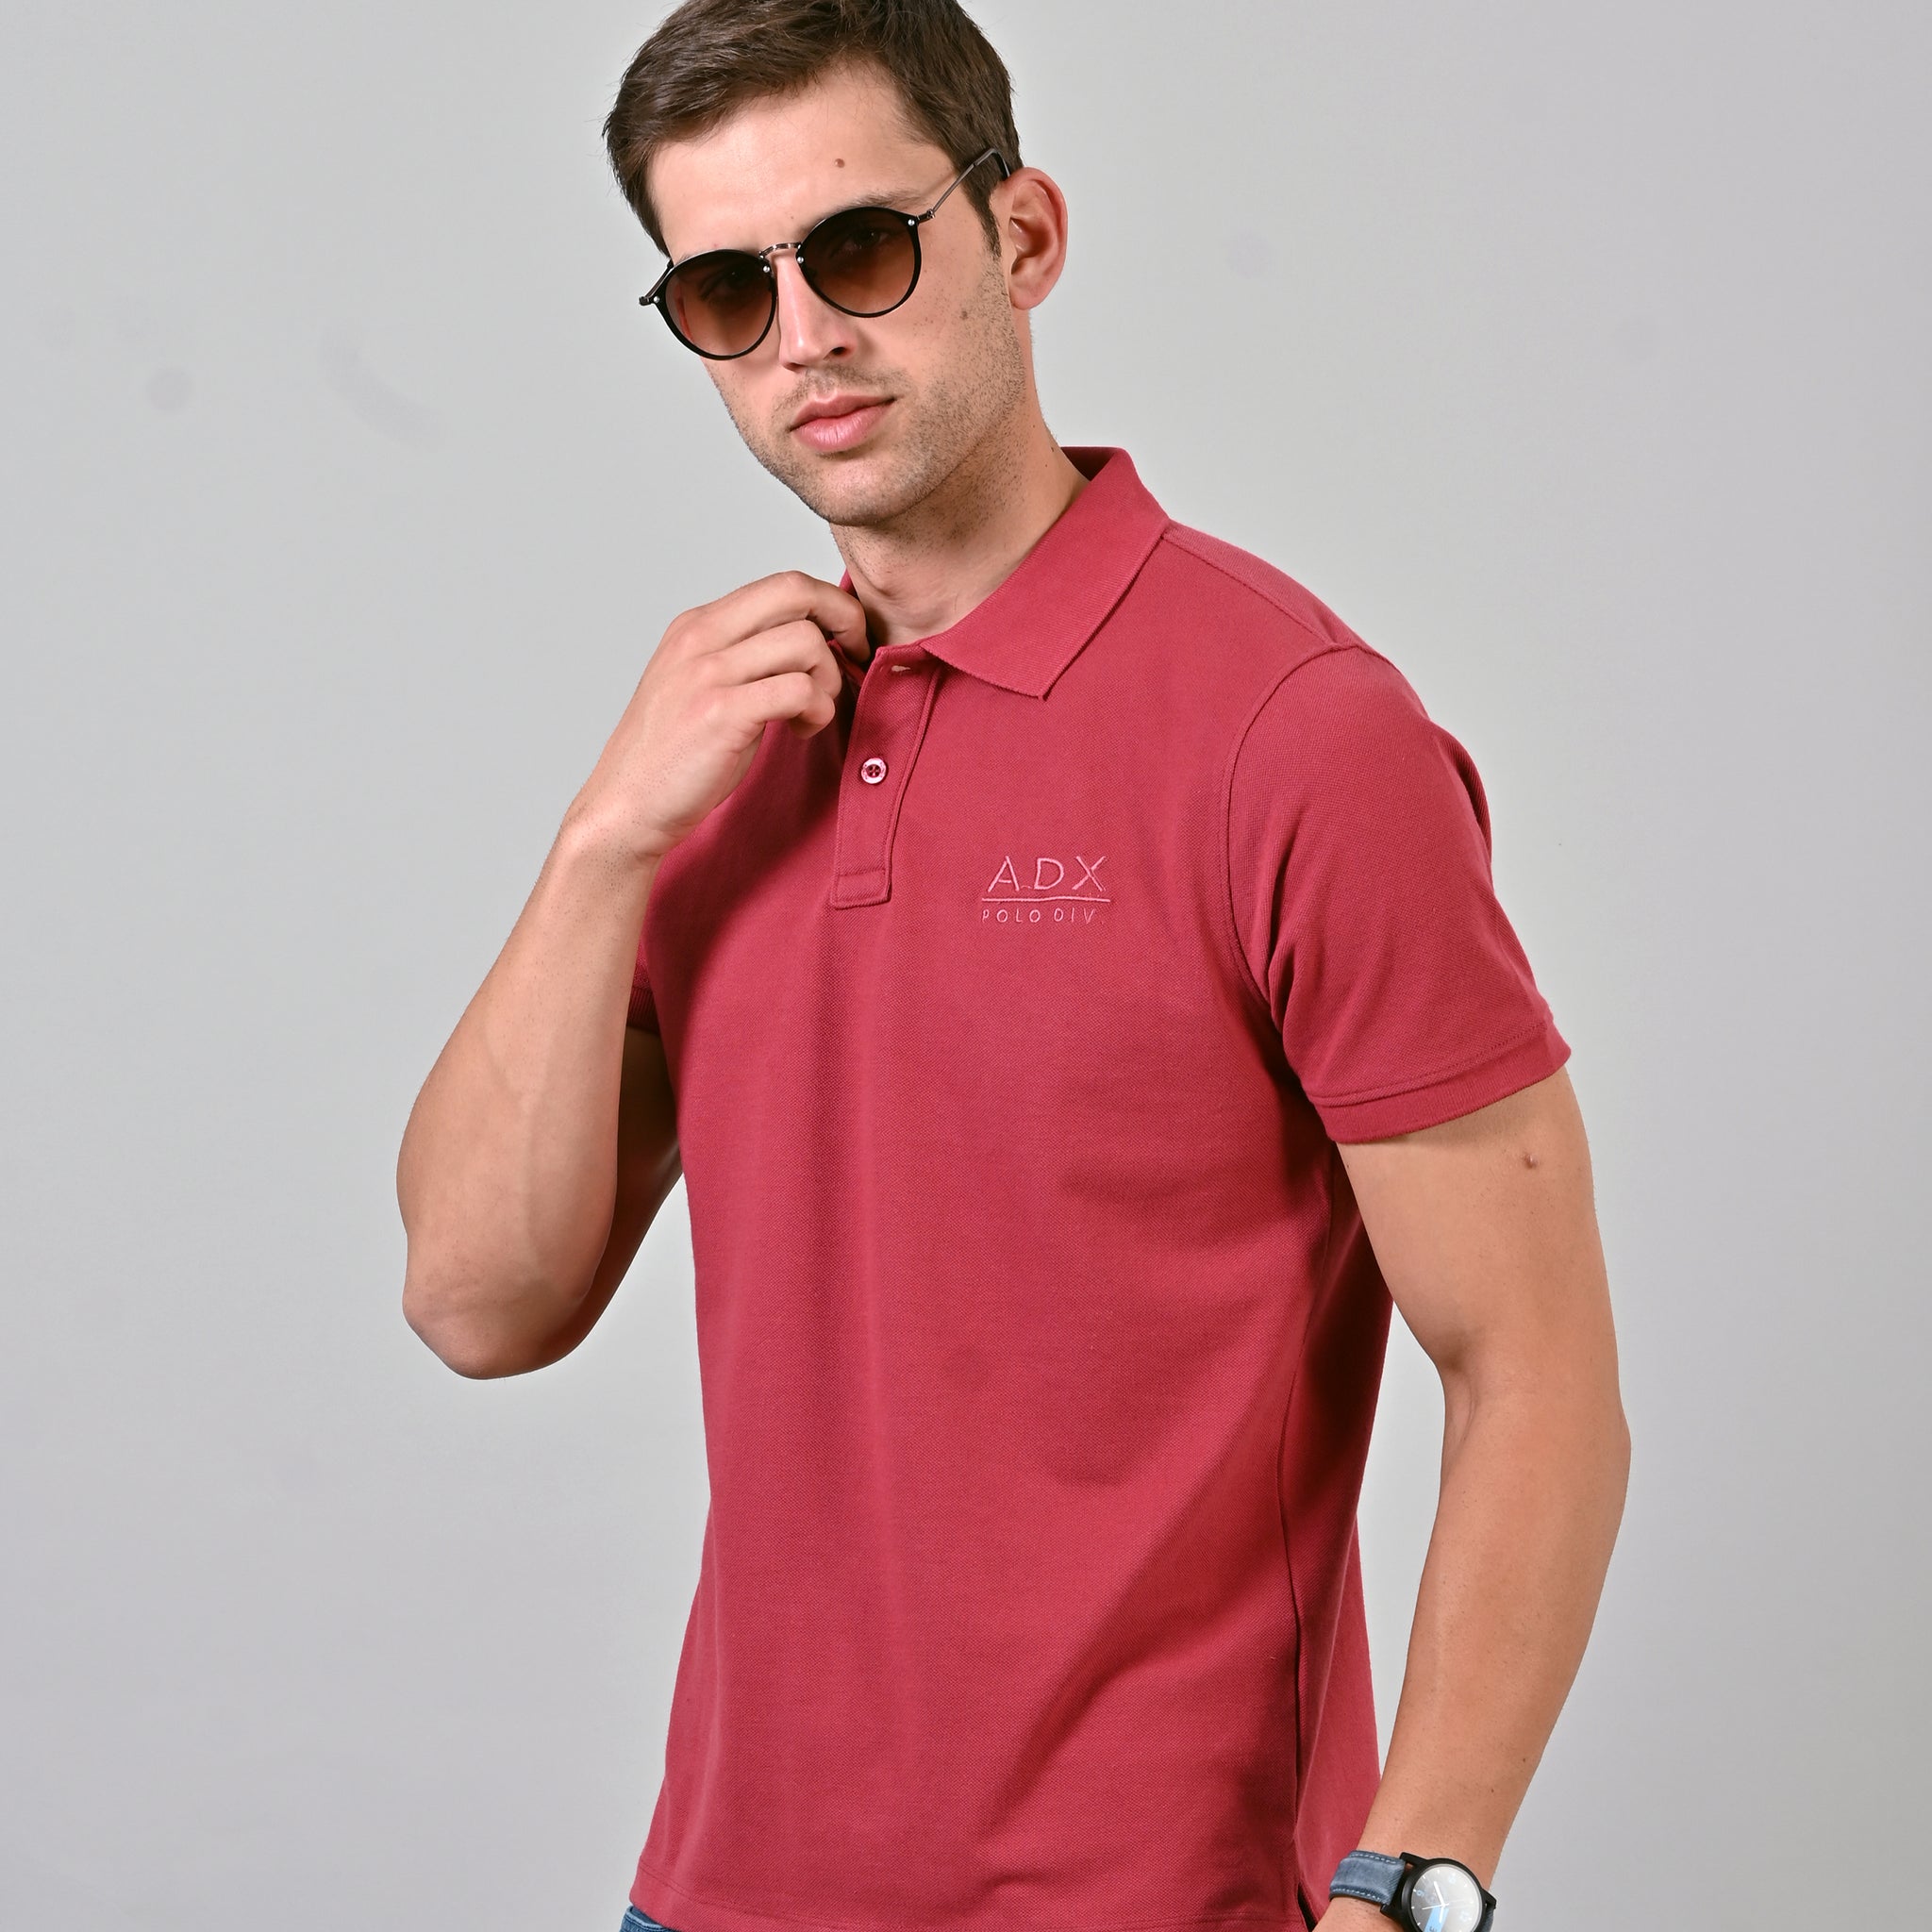 Brick Red Short Sleeve Polo T-Shirt